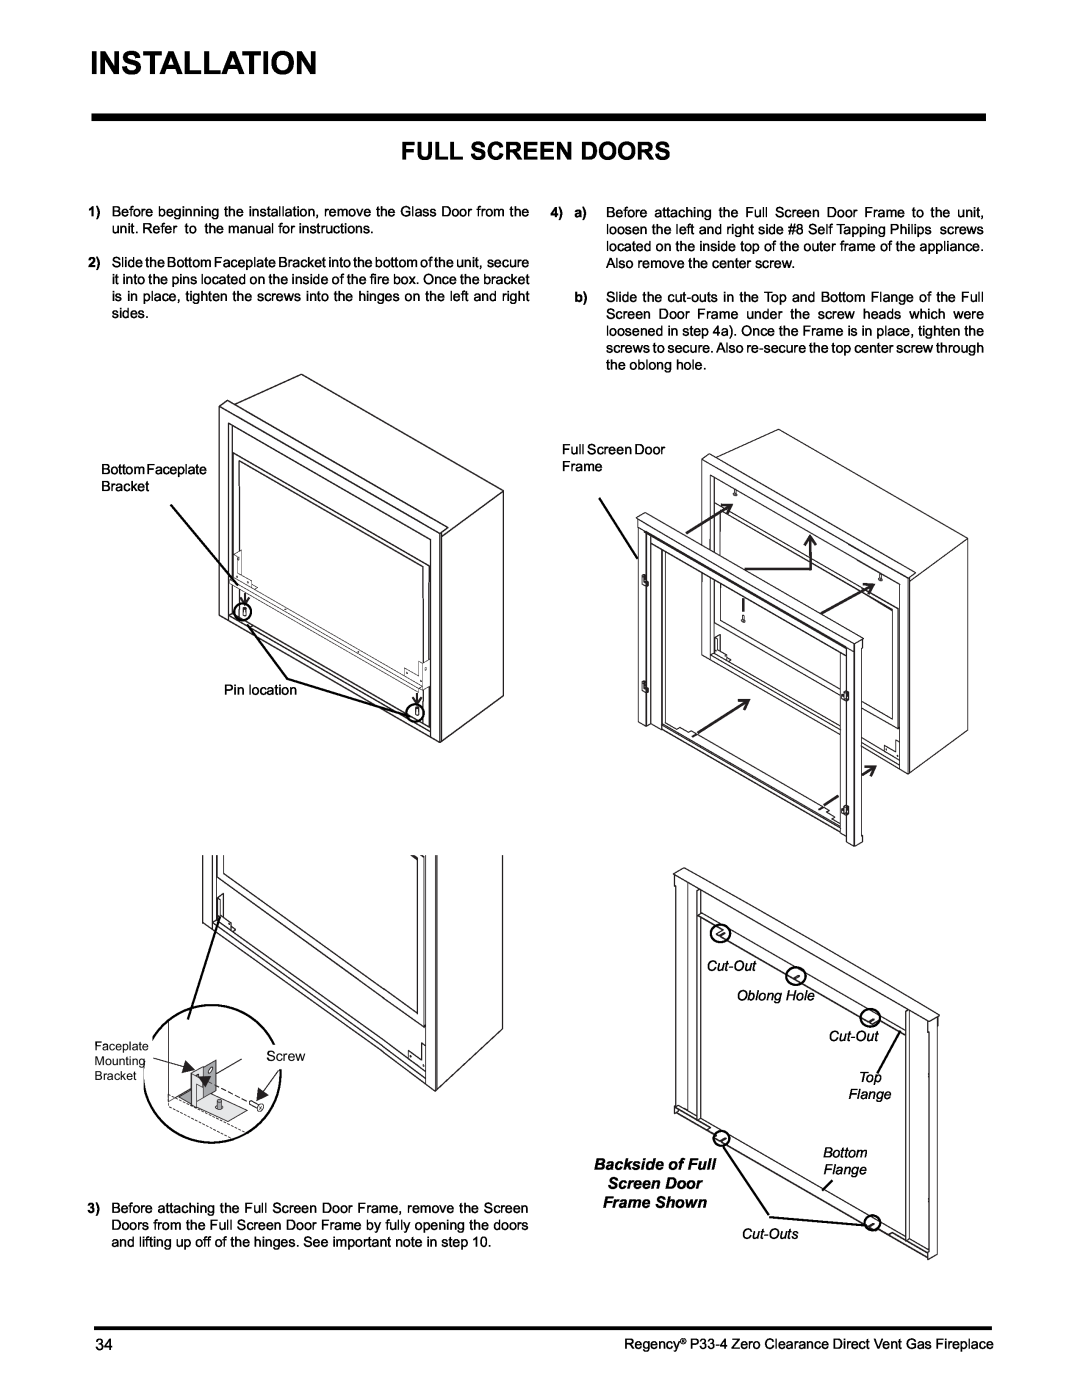 Regency P33-NG4 installation manual Full Screen Doors, Backside of FullFlange Screen Door Frame Shown, Cut-Outs 